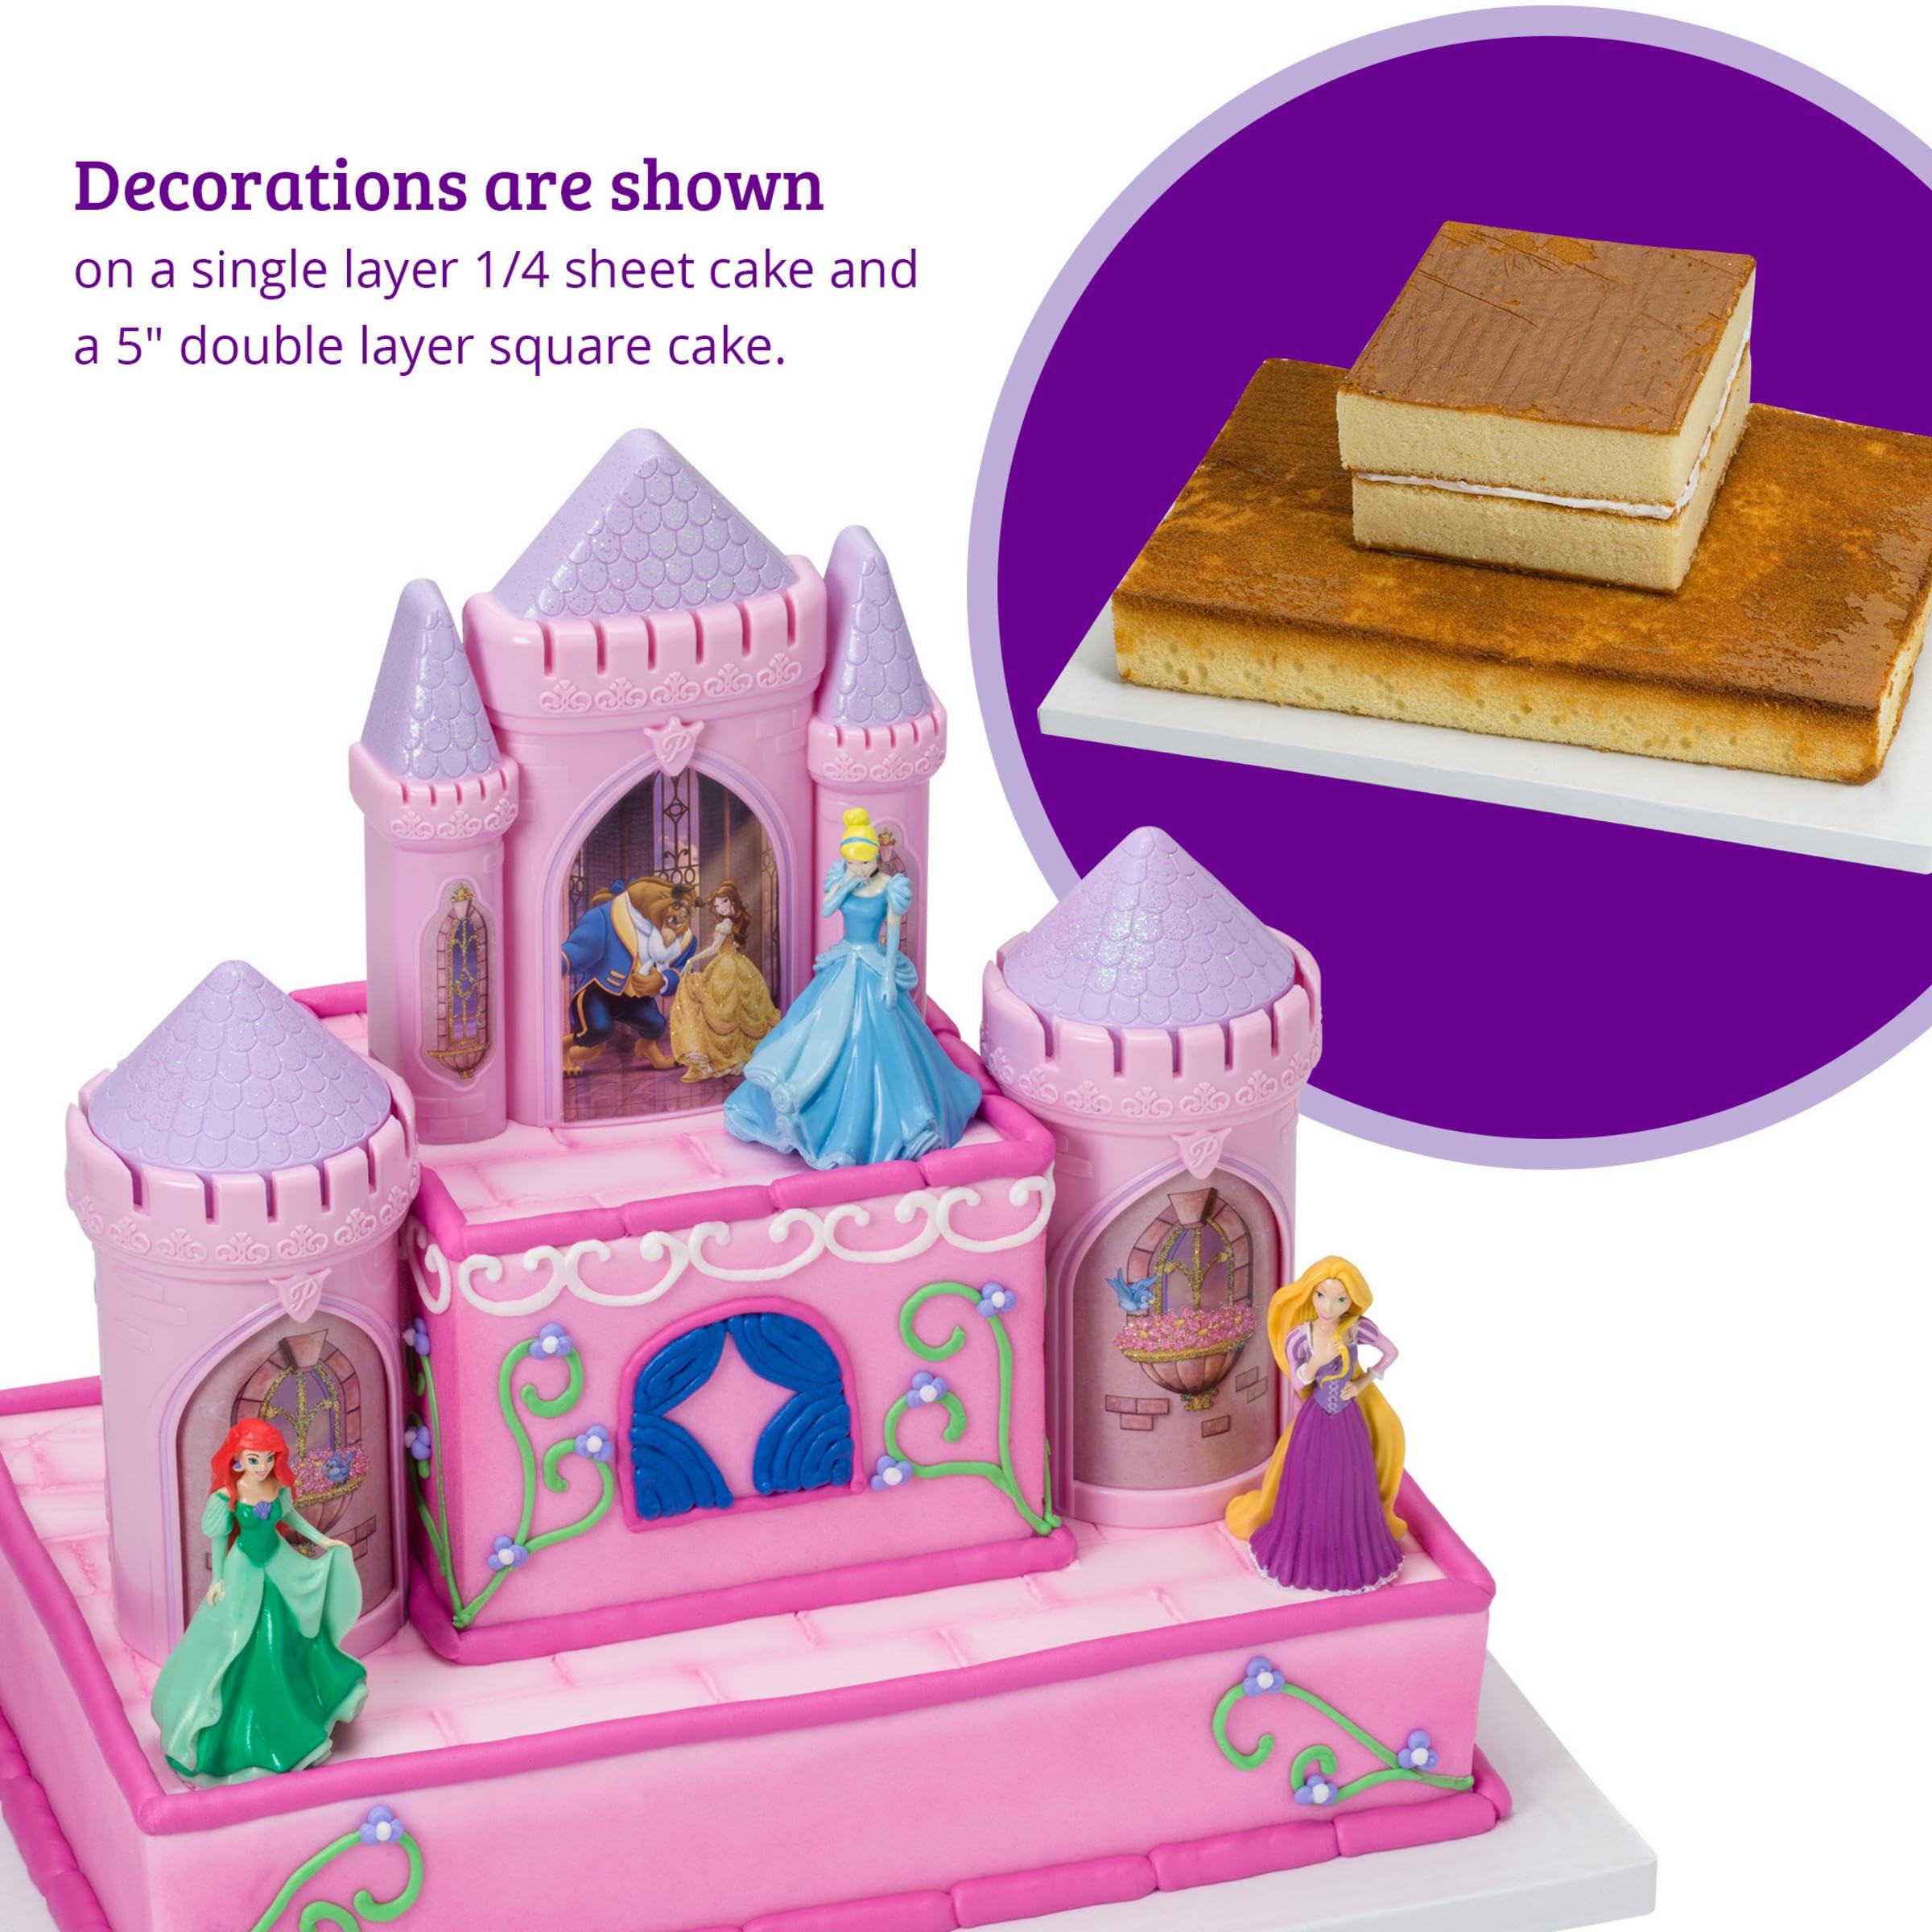 DECOPAC Disney Princess Happily Ever After Signature DecoSet Cake Topper, 4.8